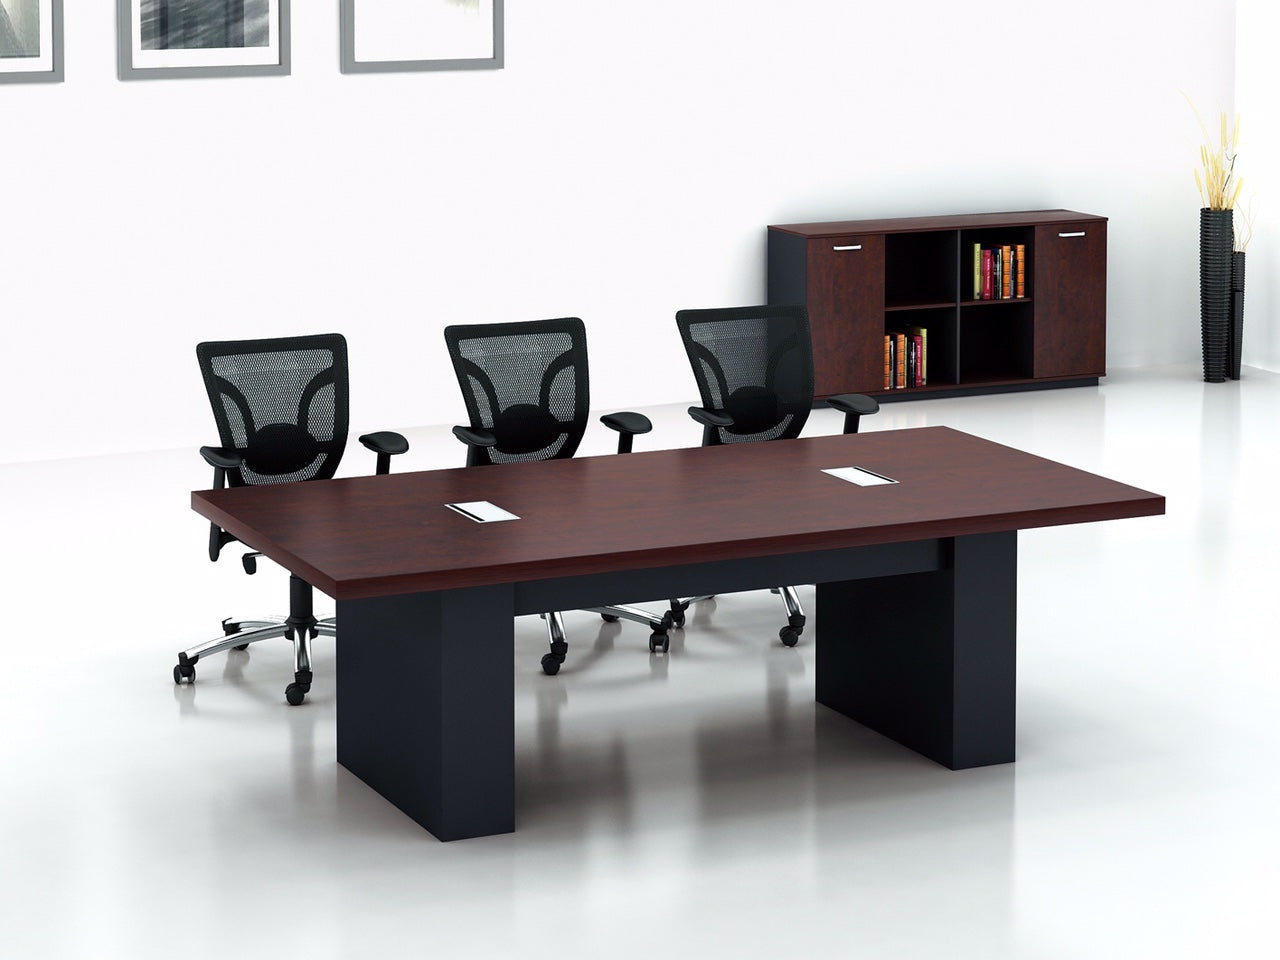 3JC-2400 Meeting Table